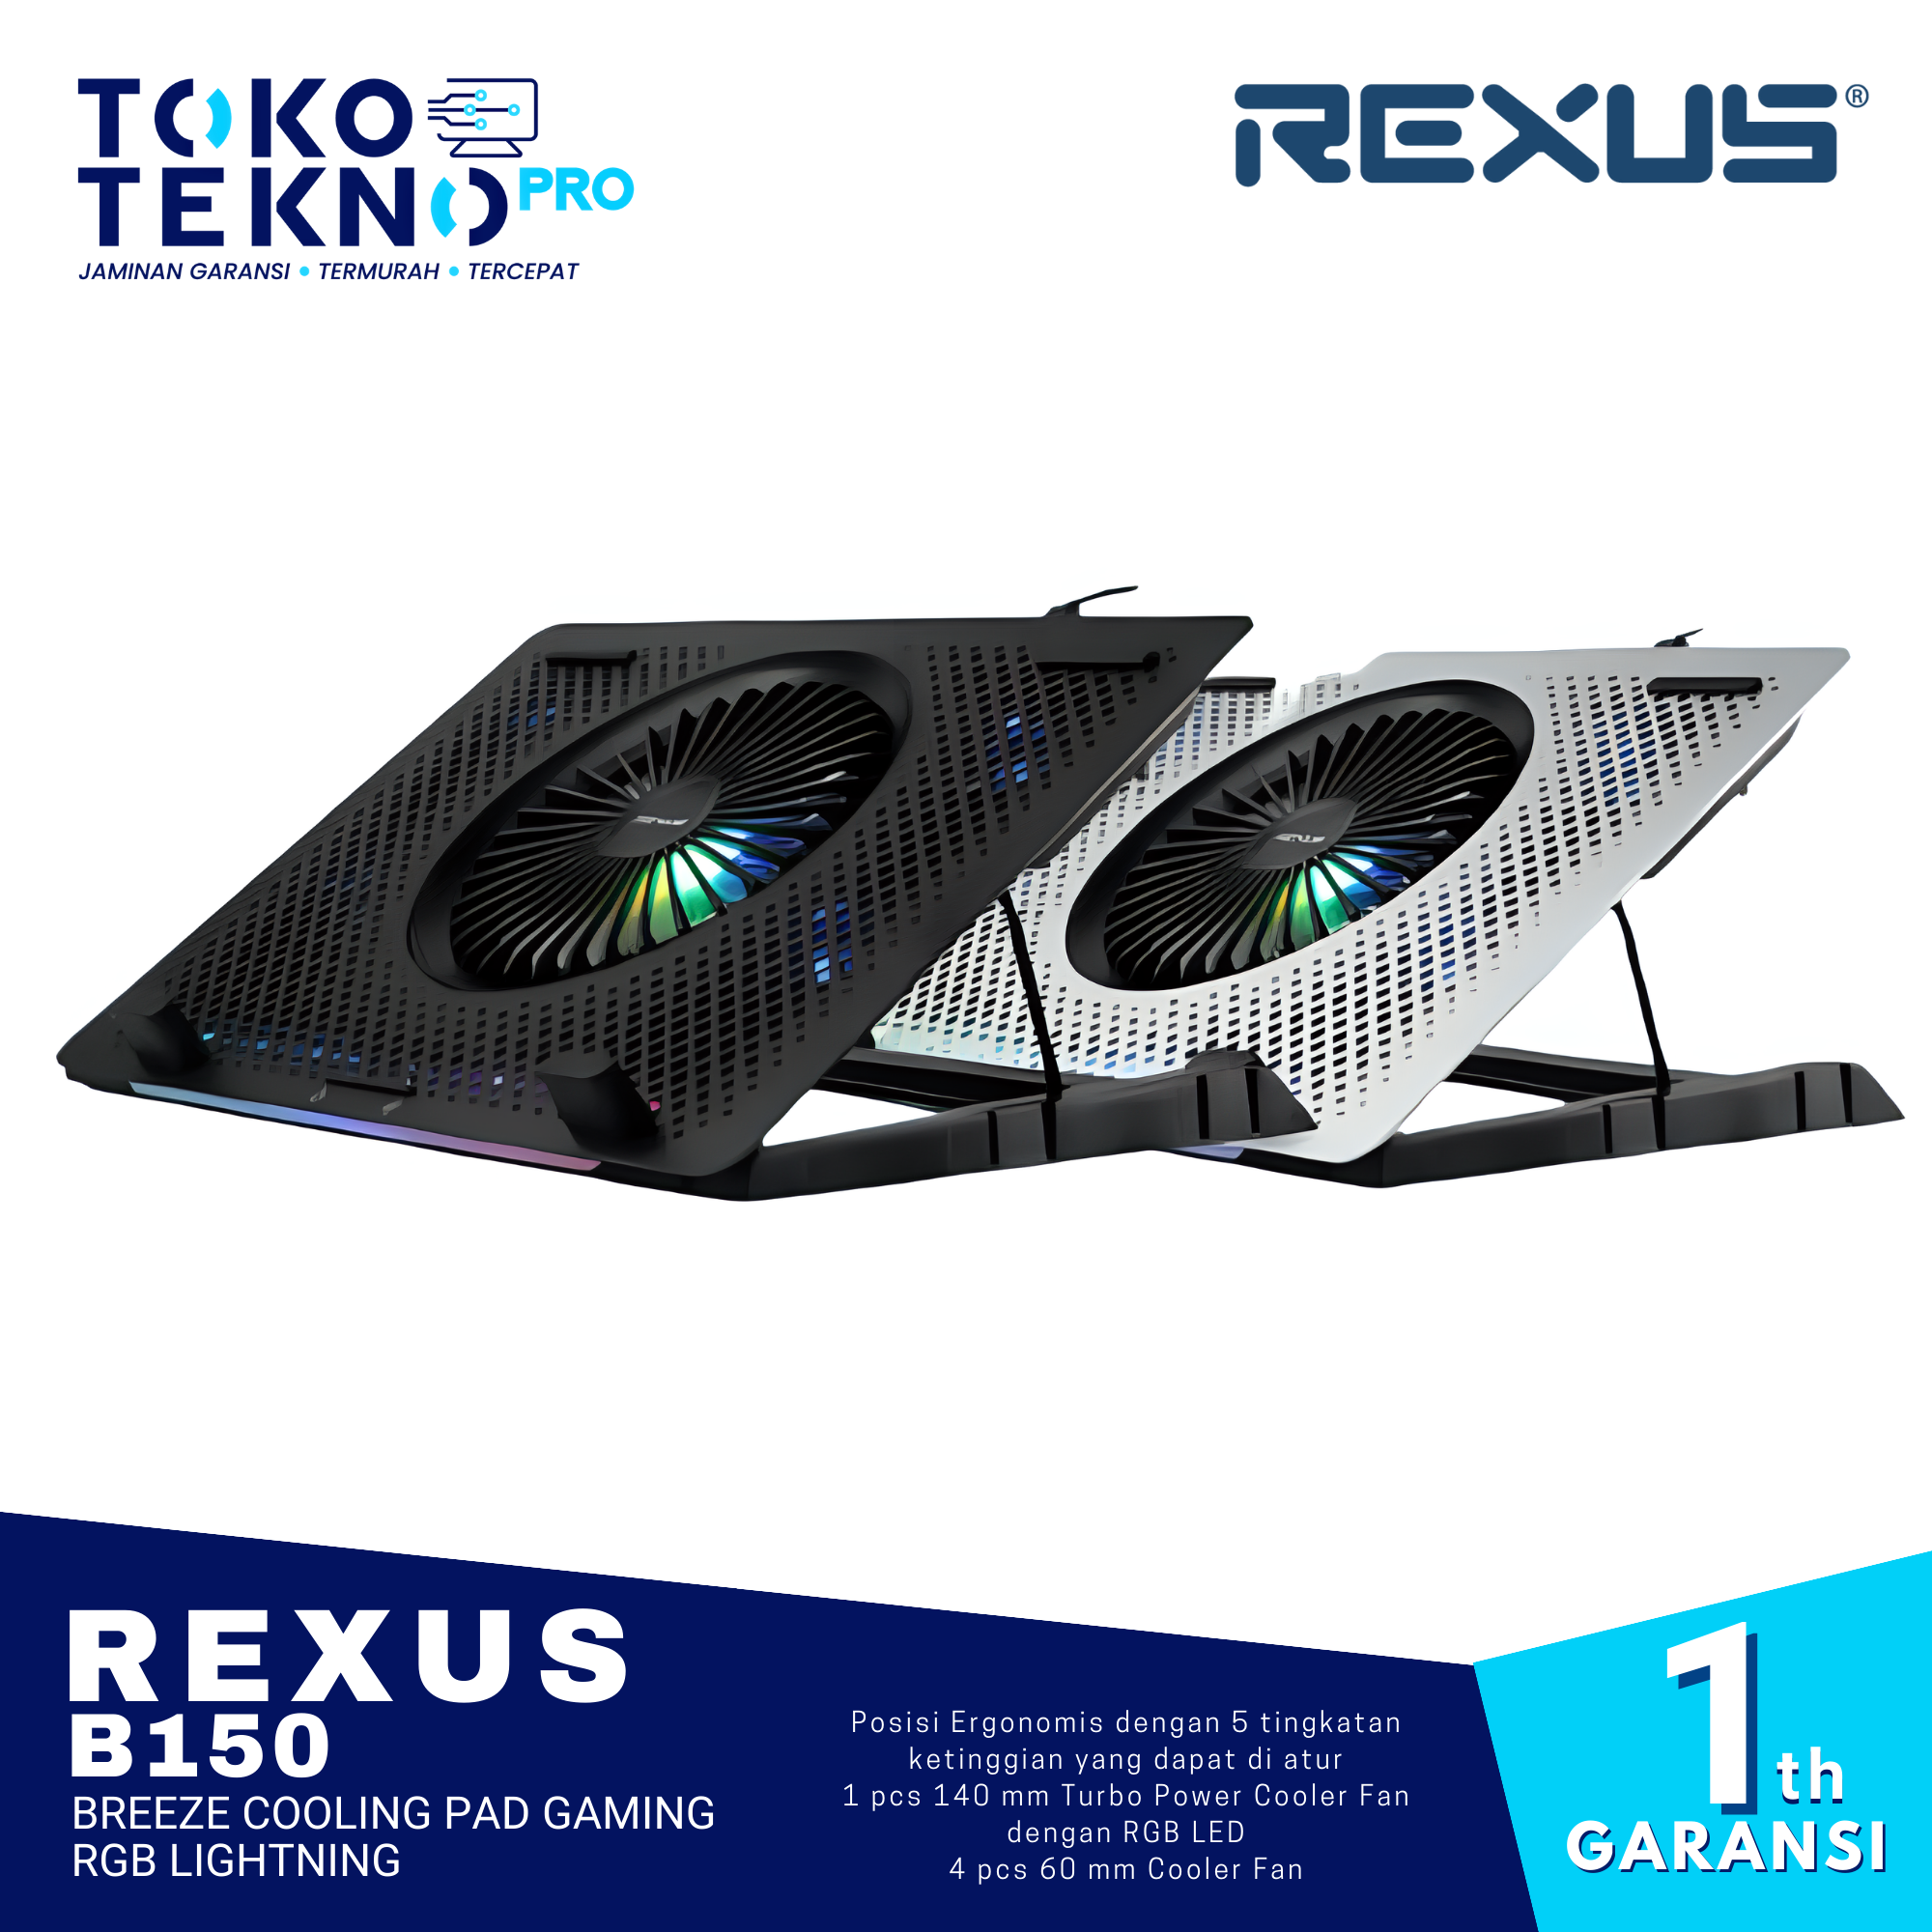 Rexus B150 Breeze Cooling Pad Gaming RGB Lightning